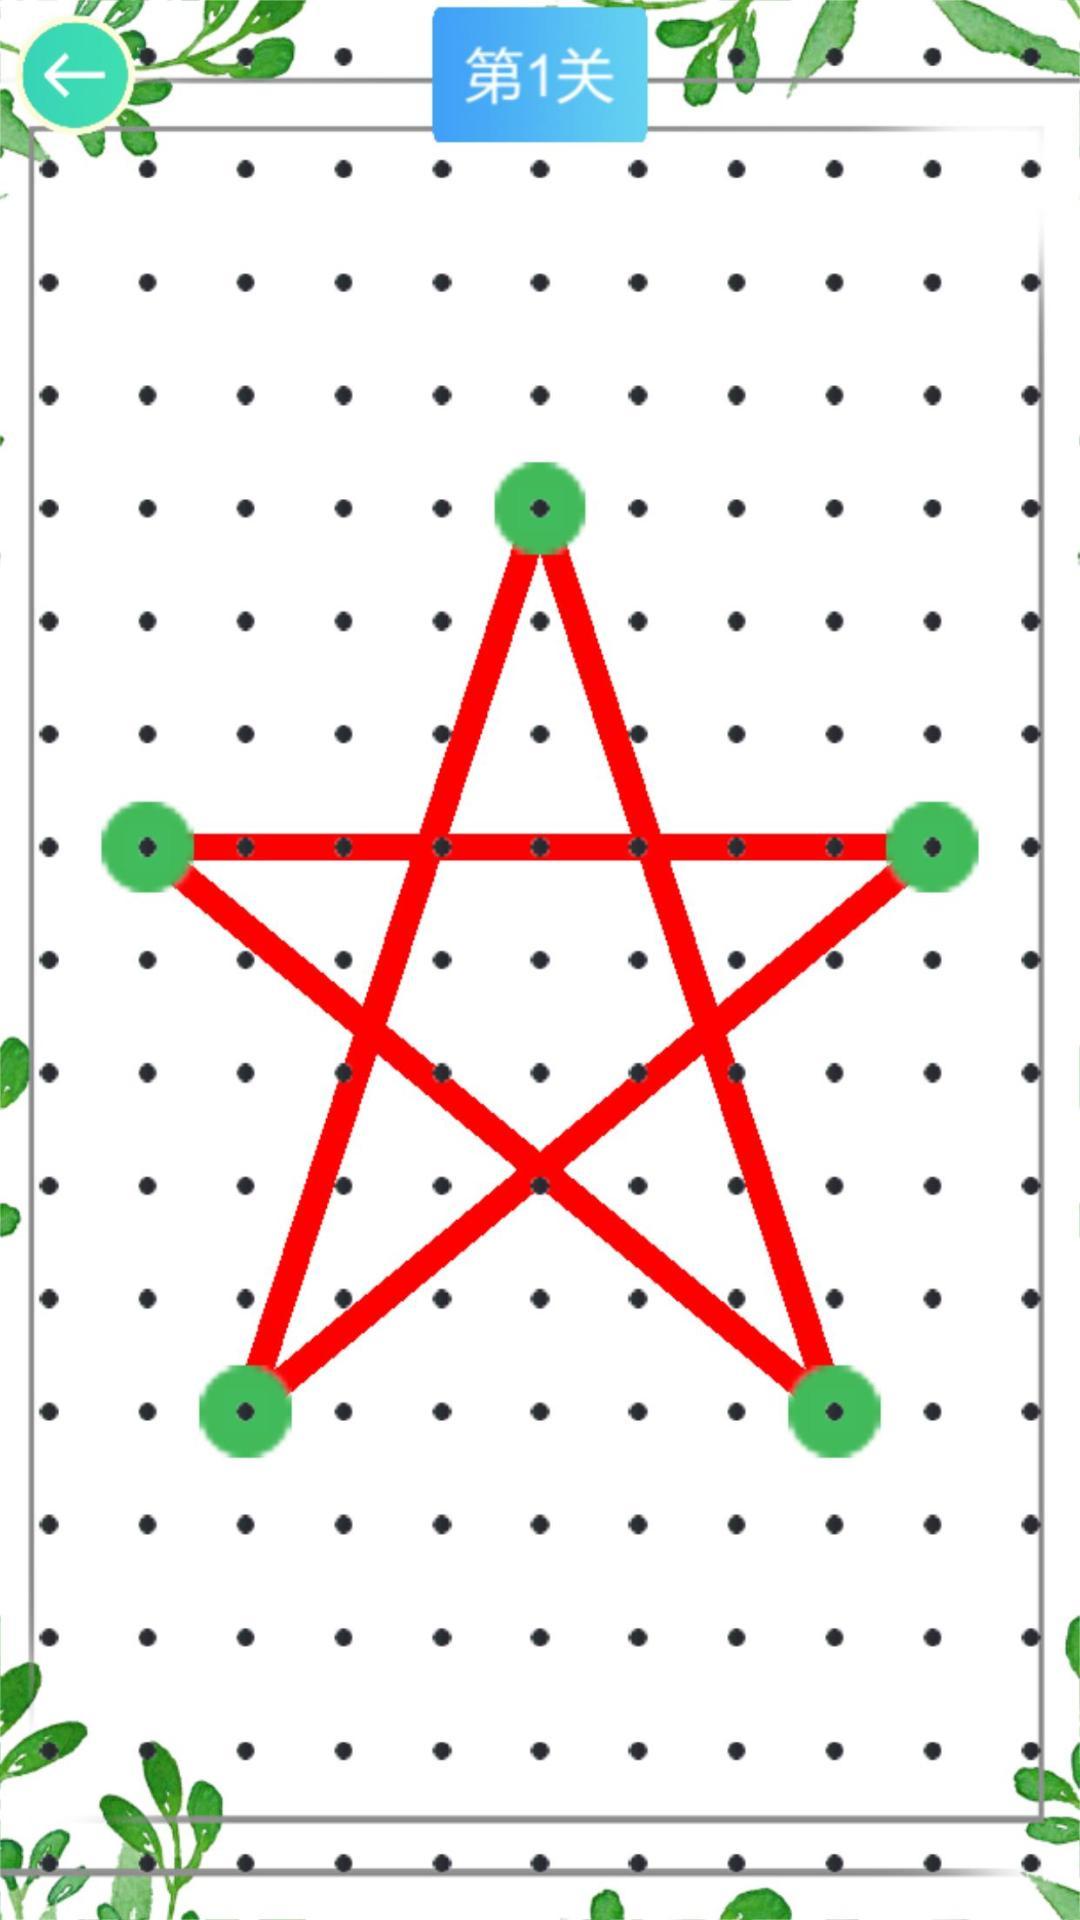 Cross Lines screenshot game